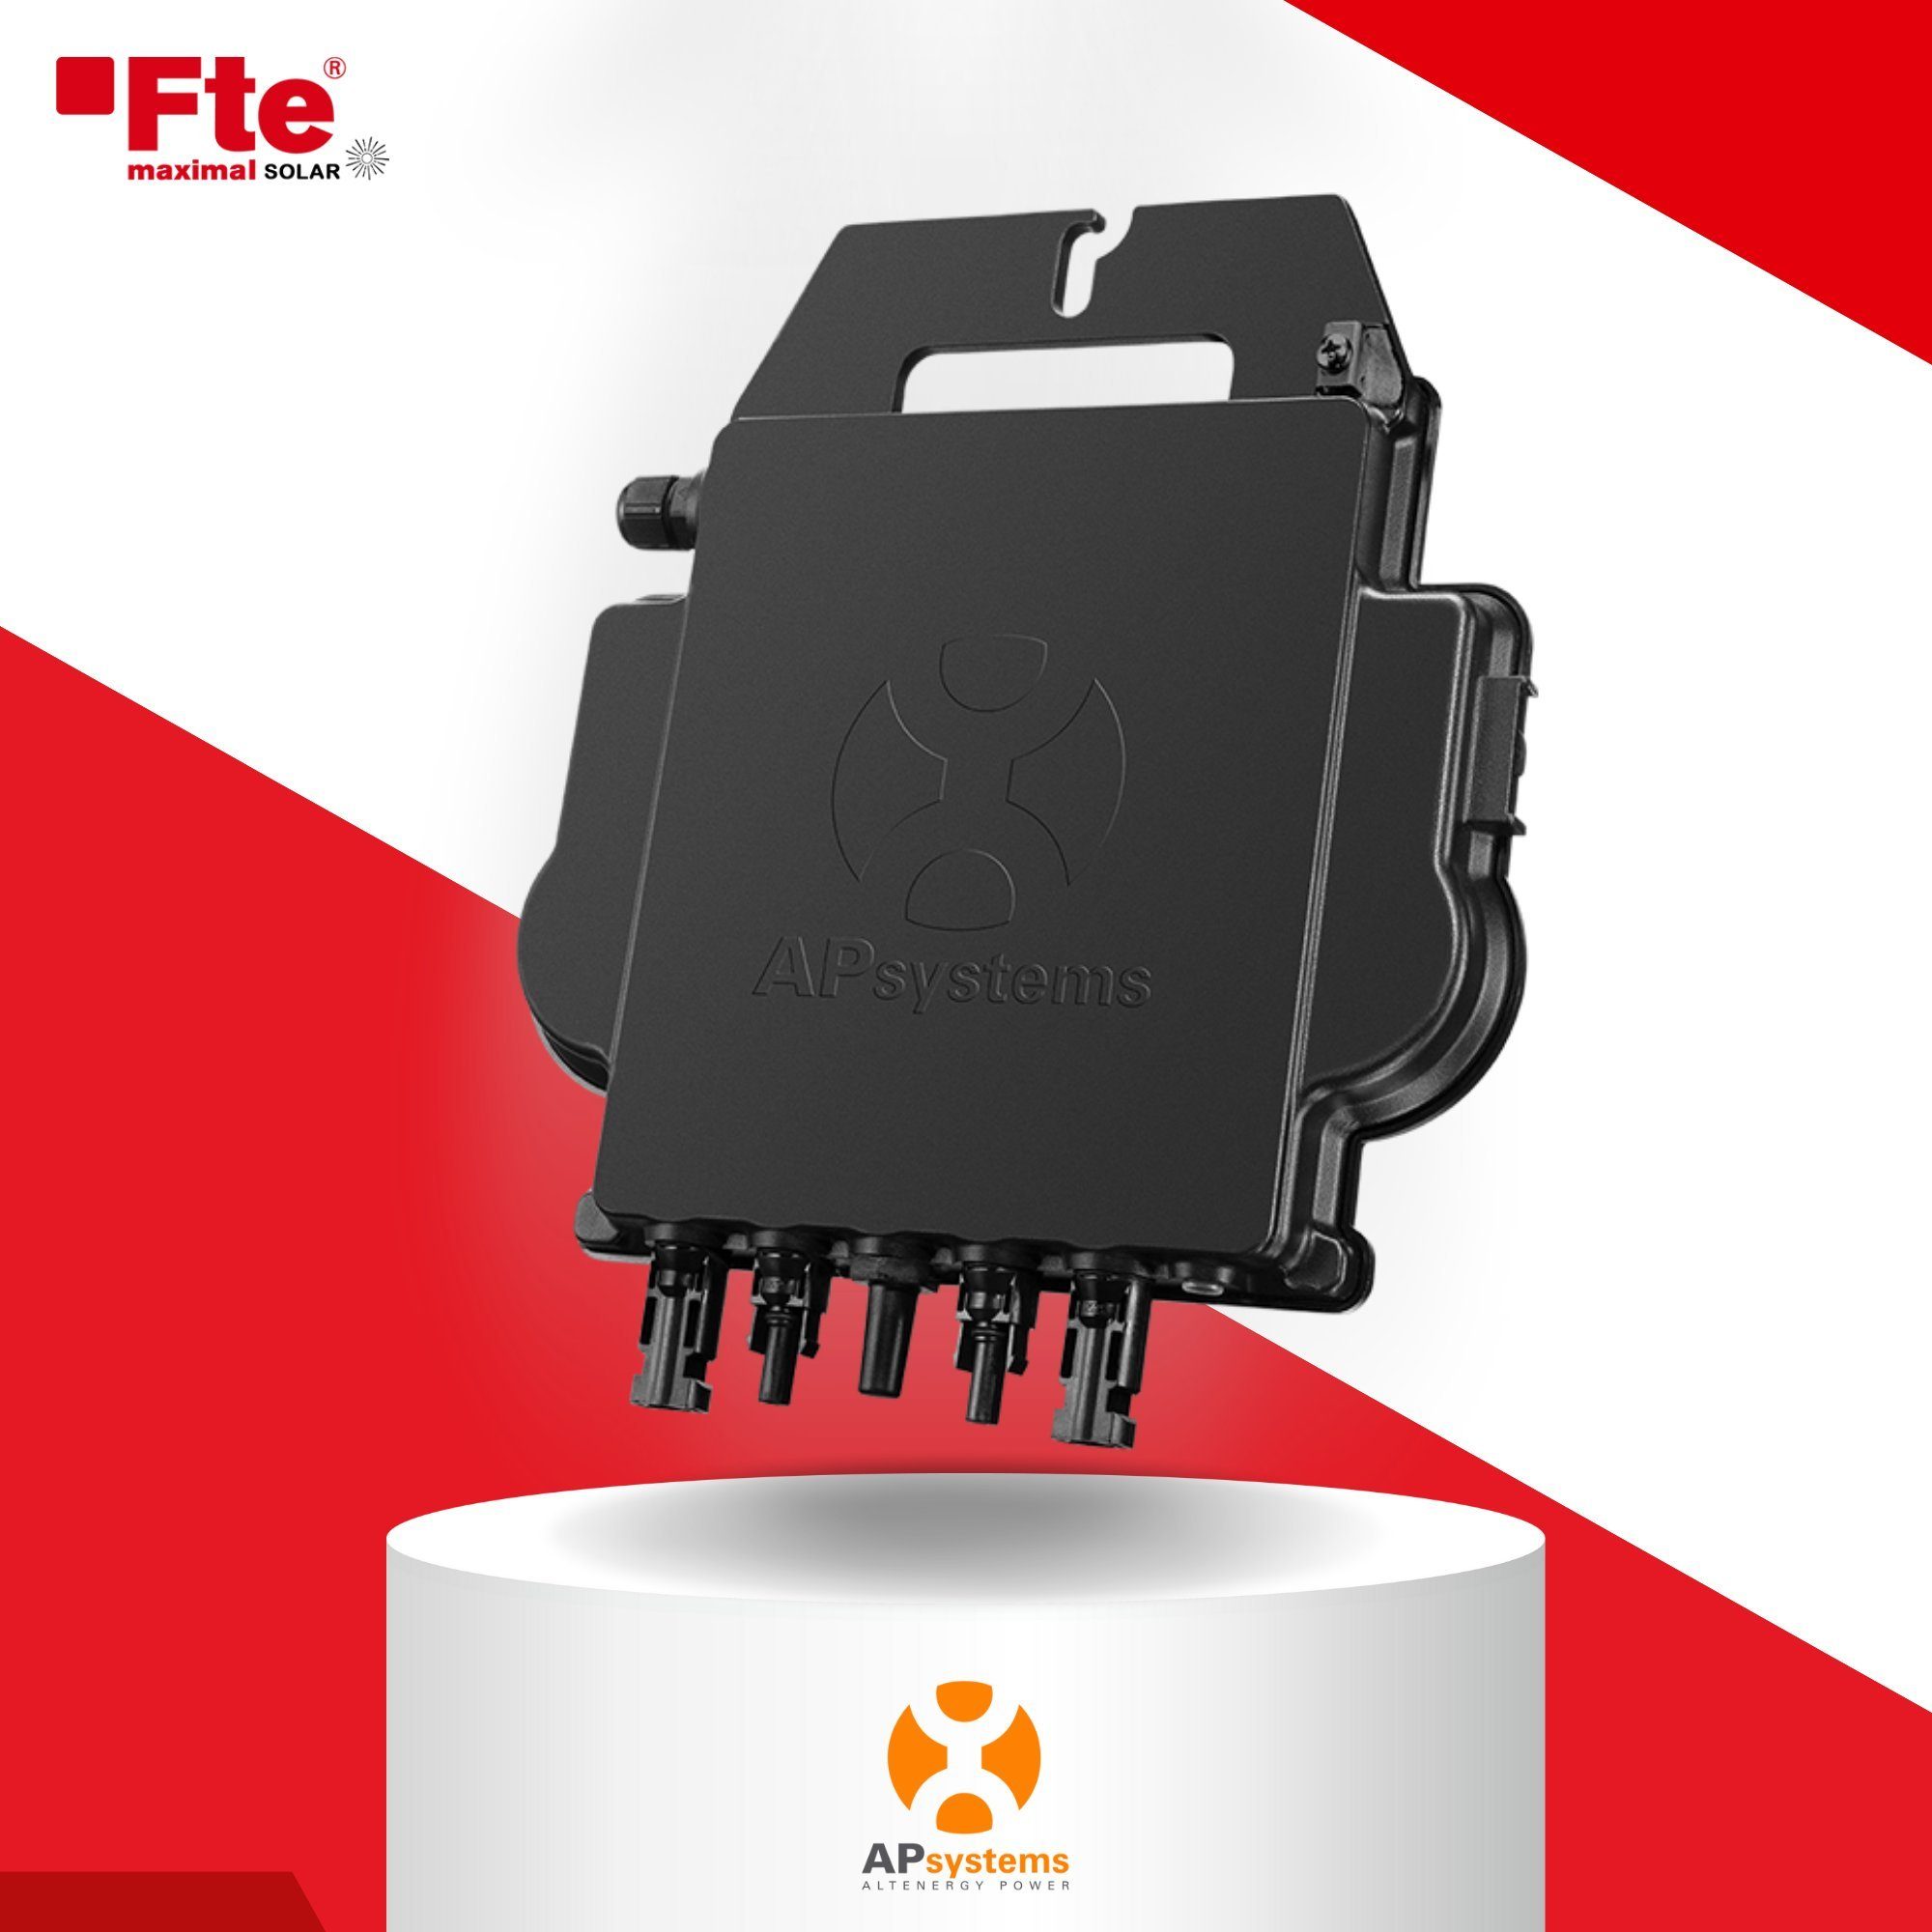 APsystems Mikro-Wechselrichter 800W EZ1-M WIFI-Bluetooth